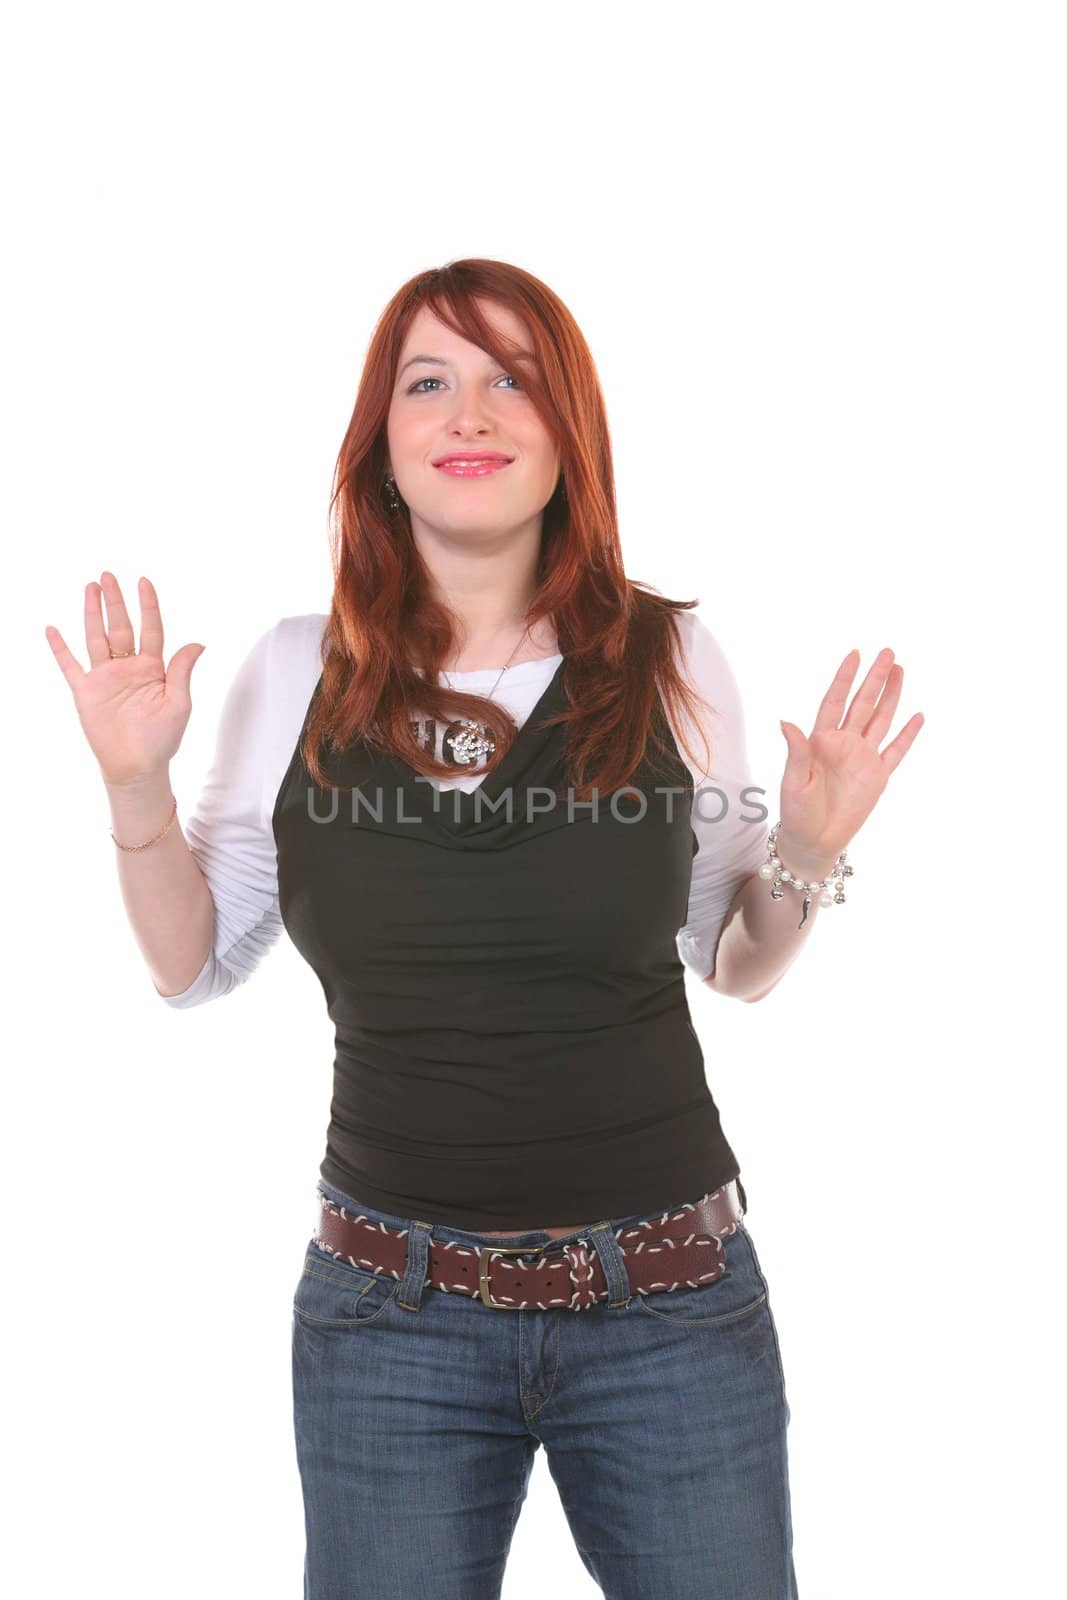 european girl in jeans dances on white background